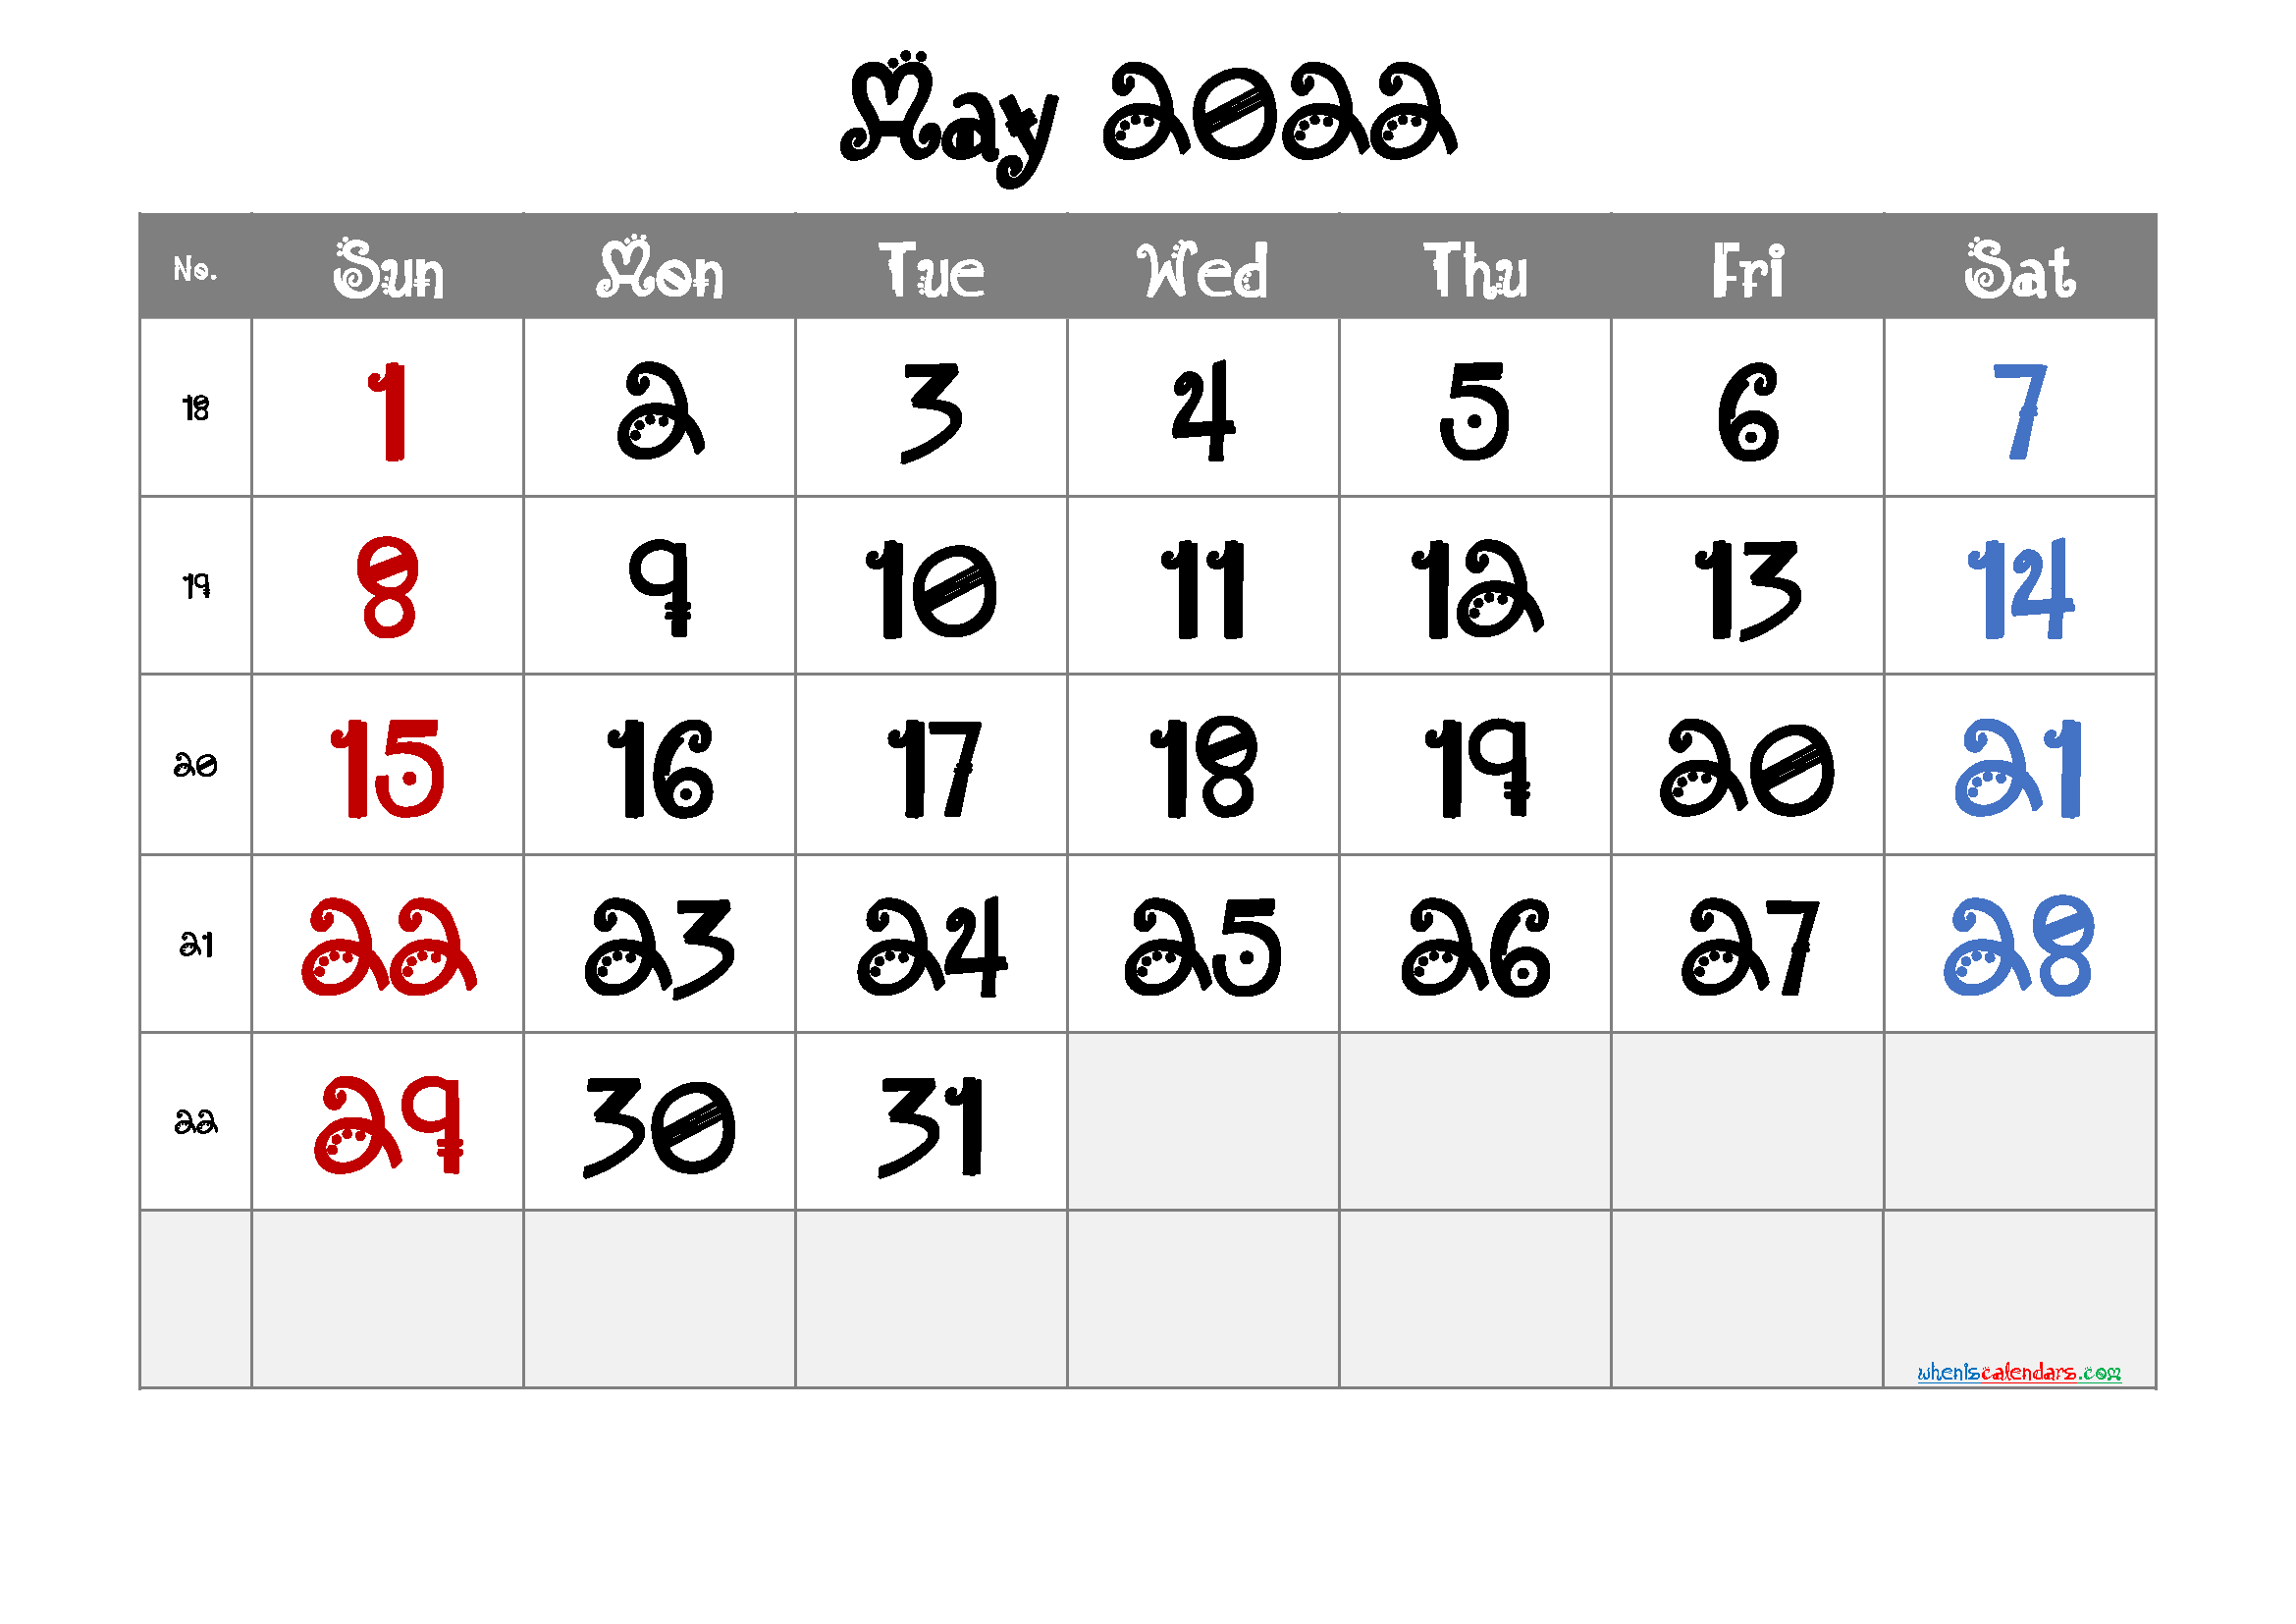 Free May 2022 Calendar Template